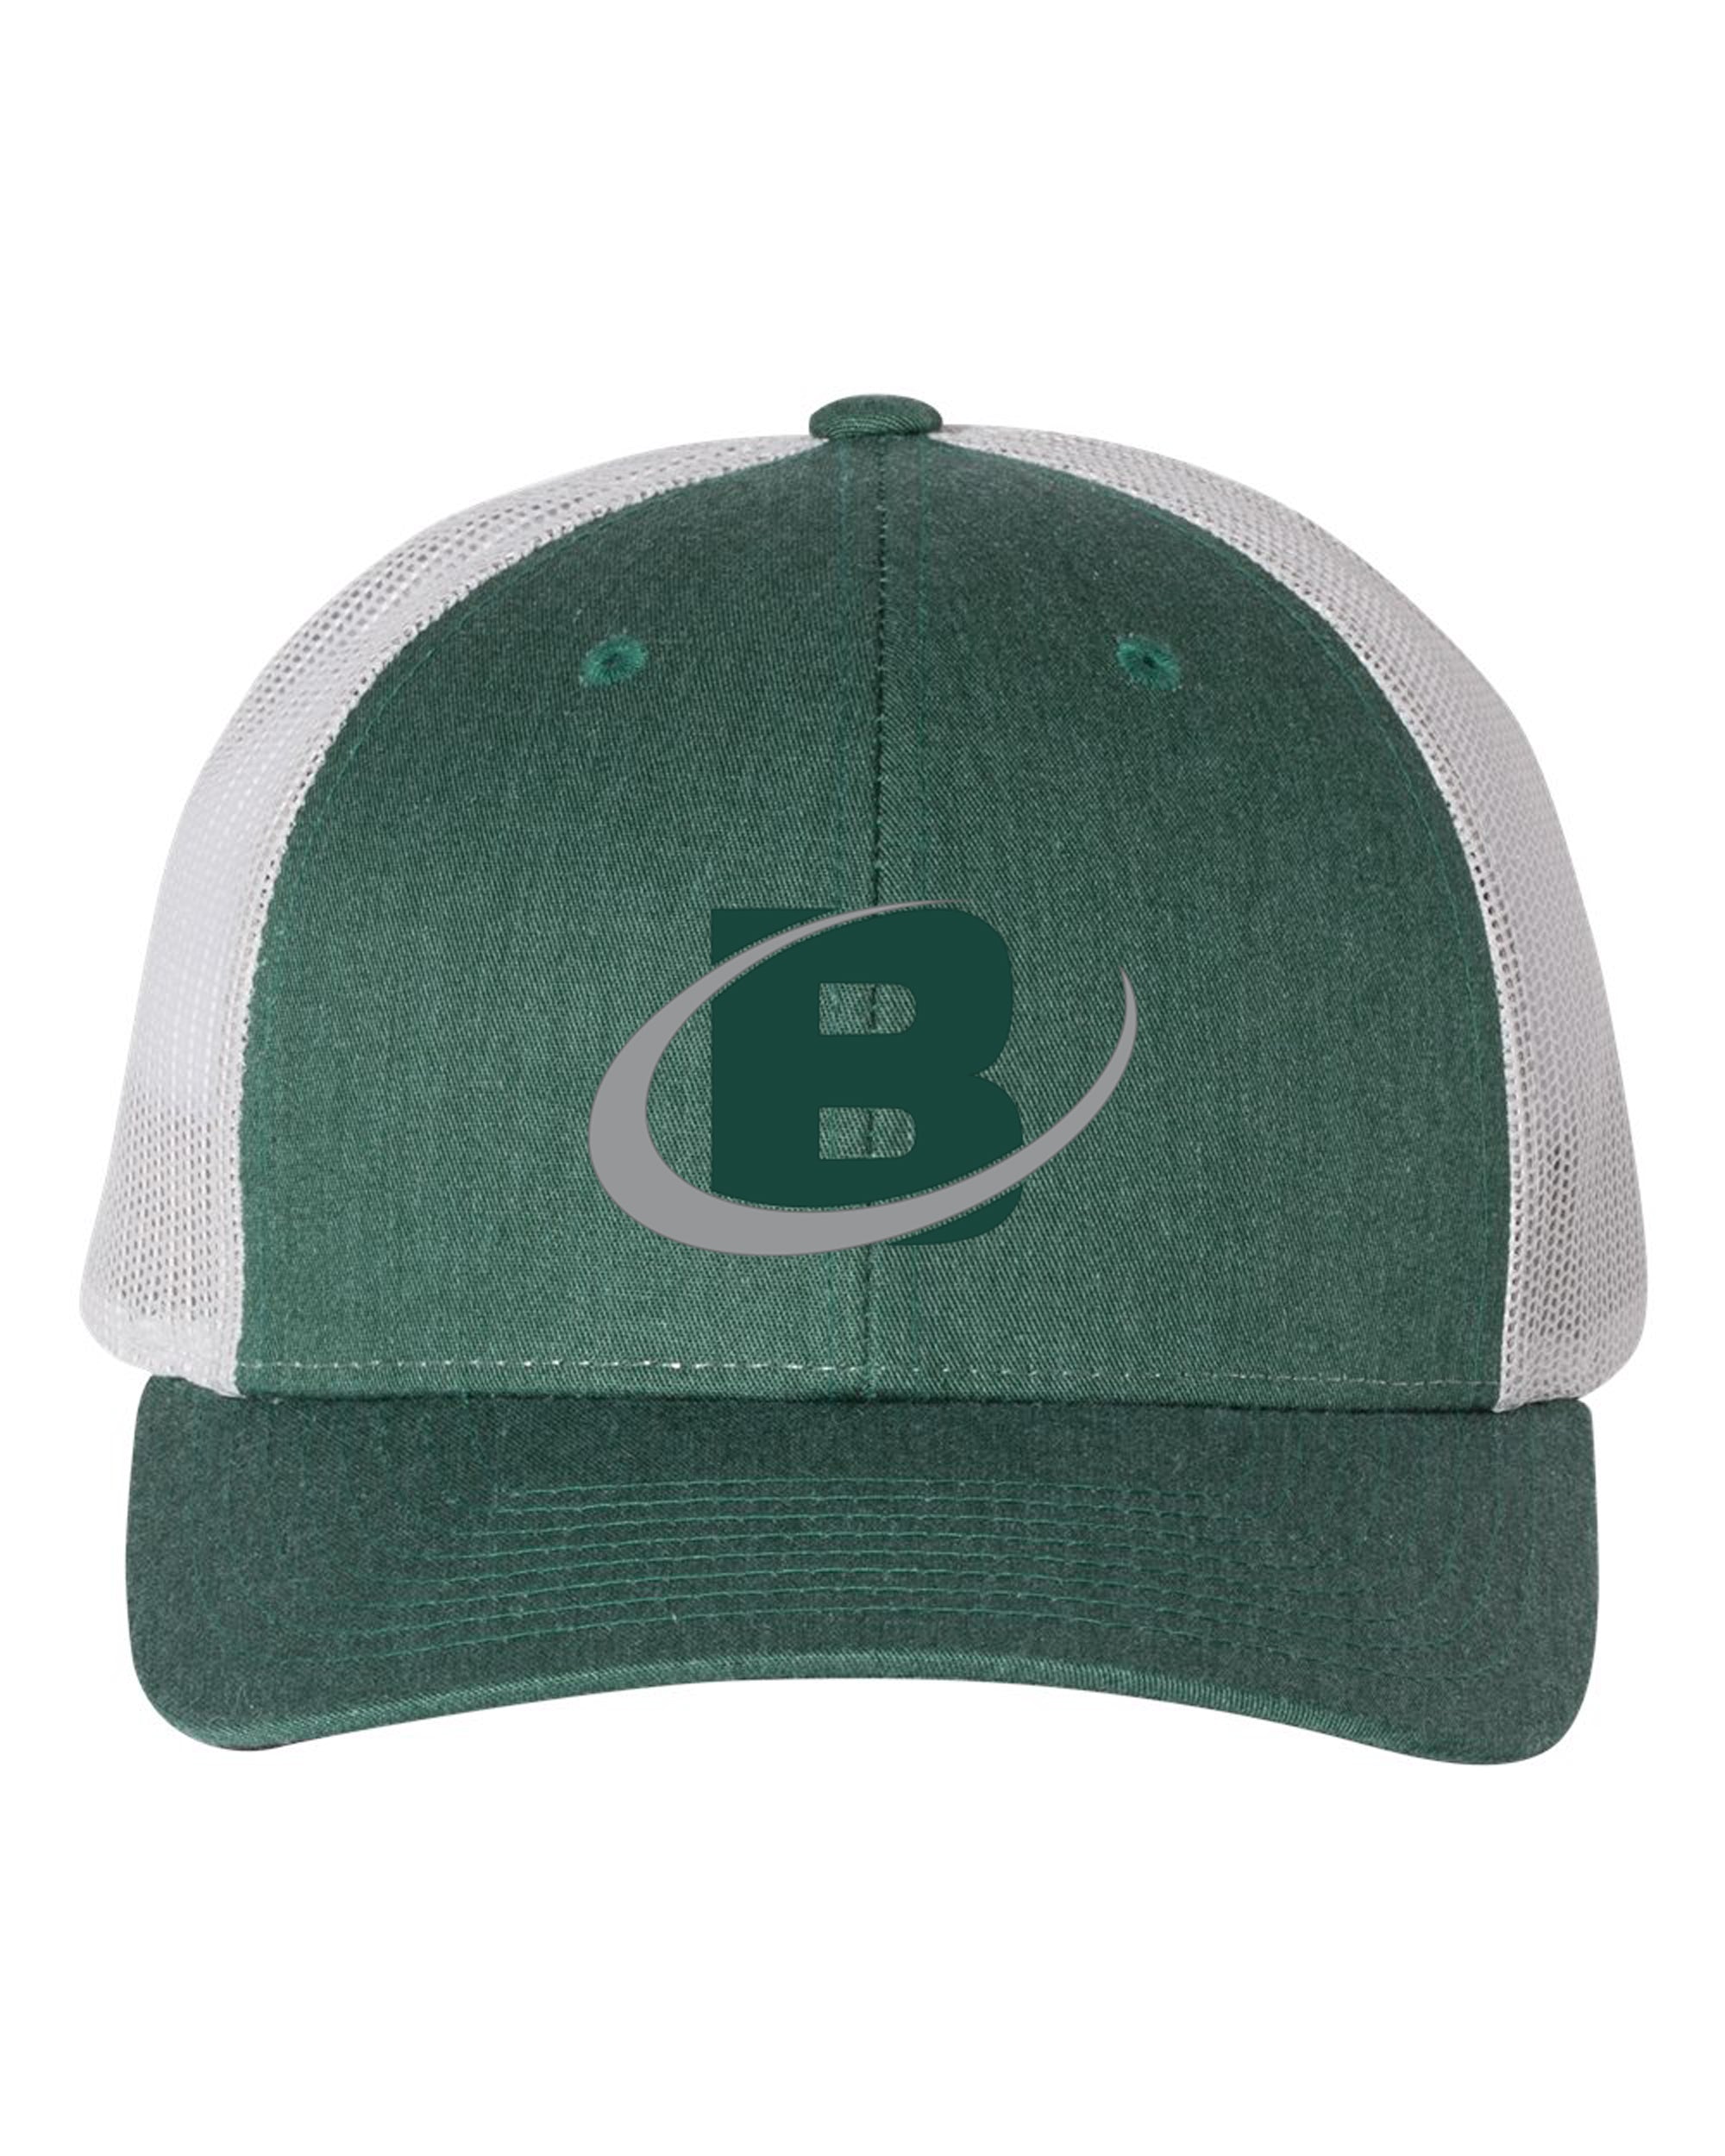 Bowman Turfgrass Professionals - Structured Hat